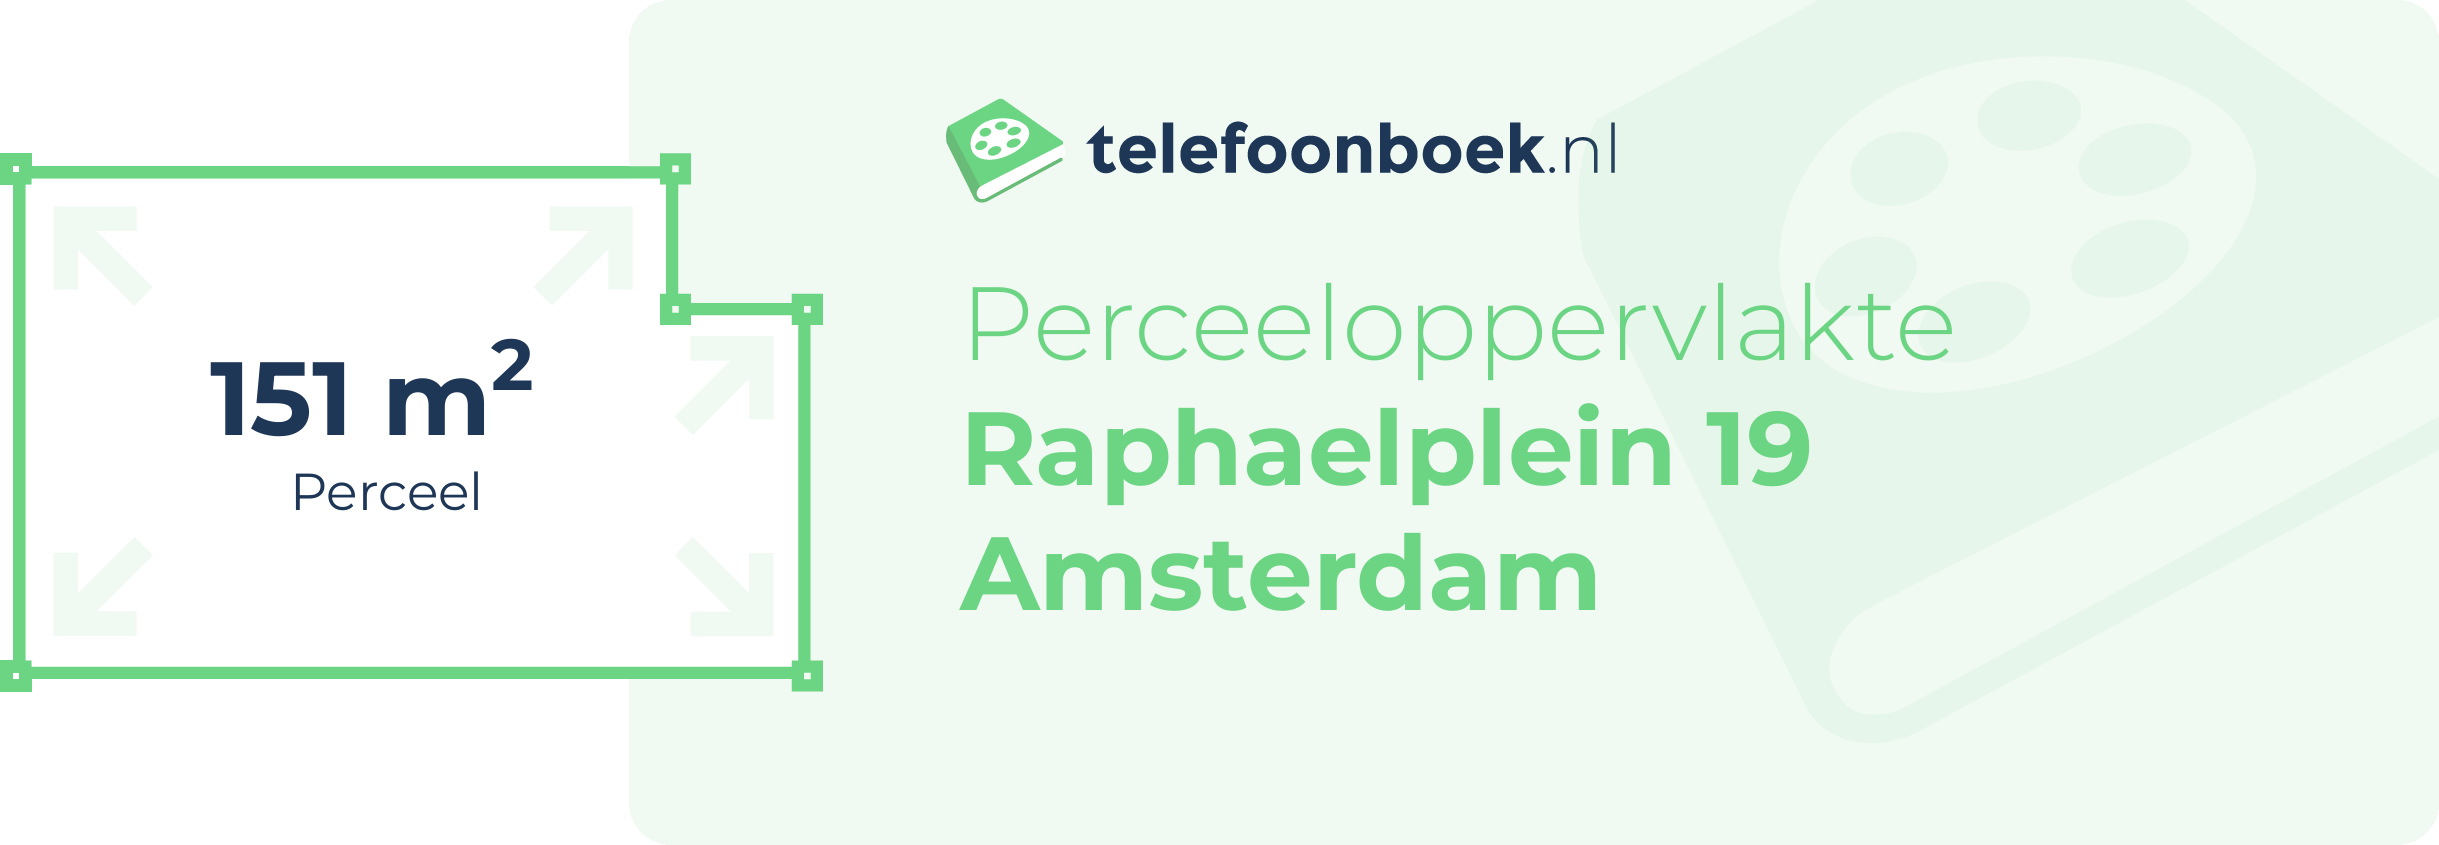 Perceeloppervlakte Raphaelplein 19 Amsterdam